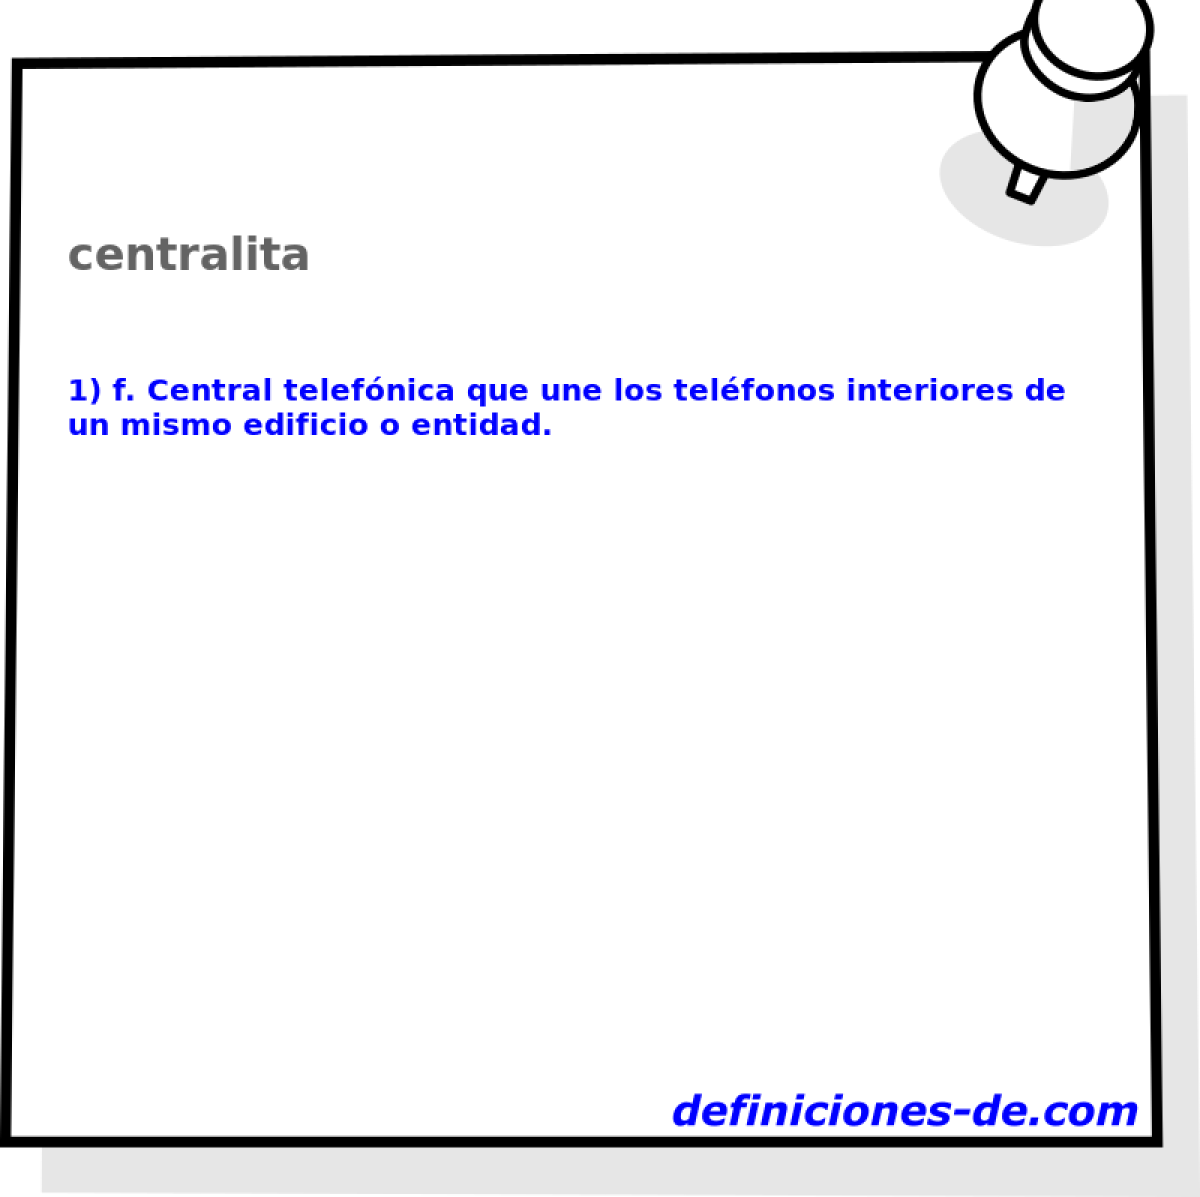 centralita 